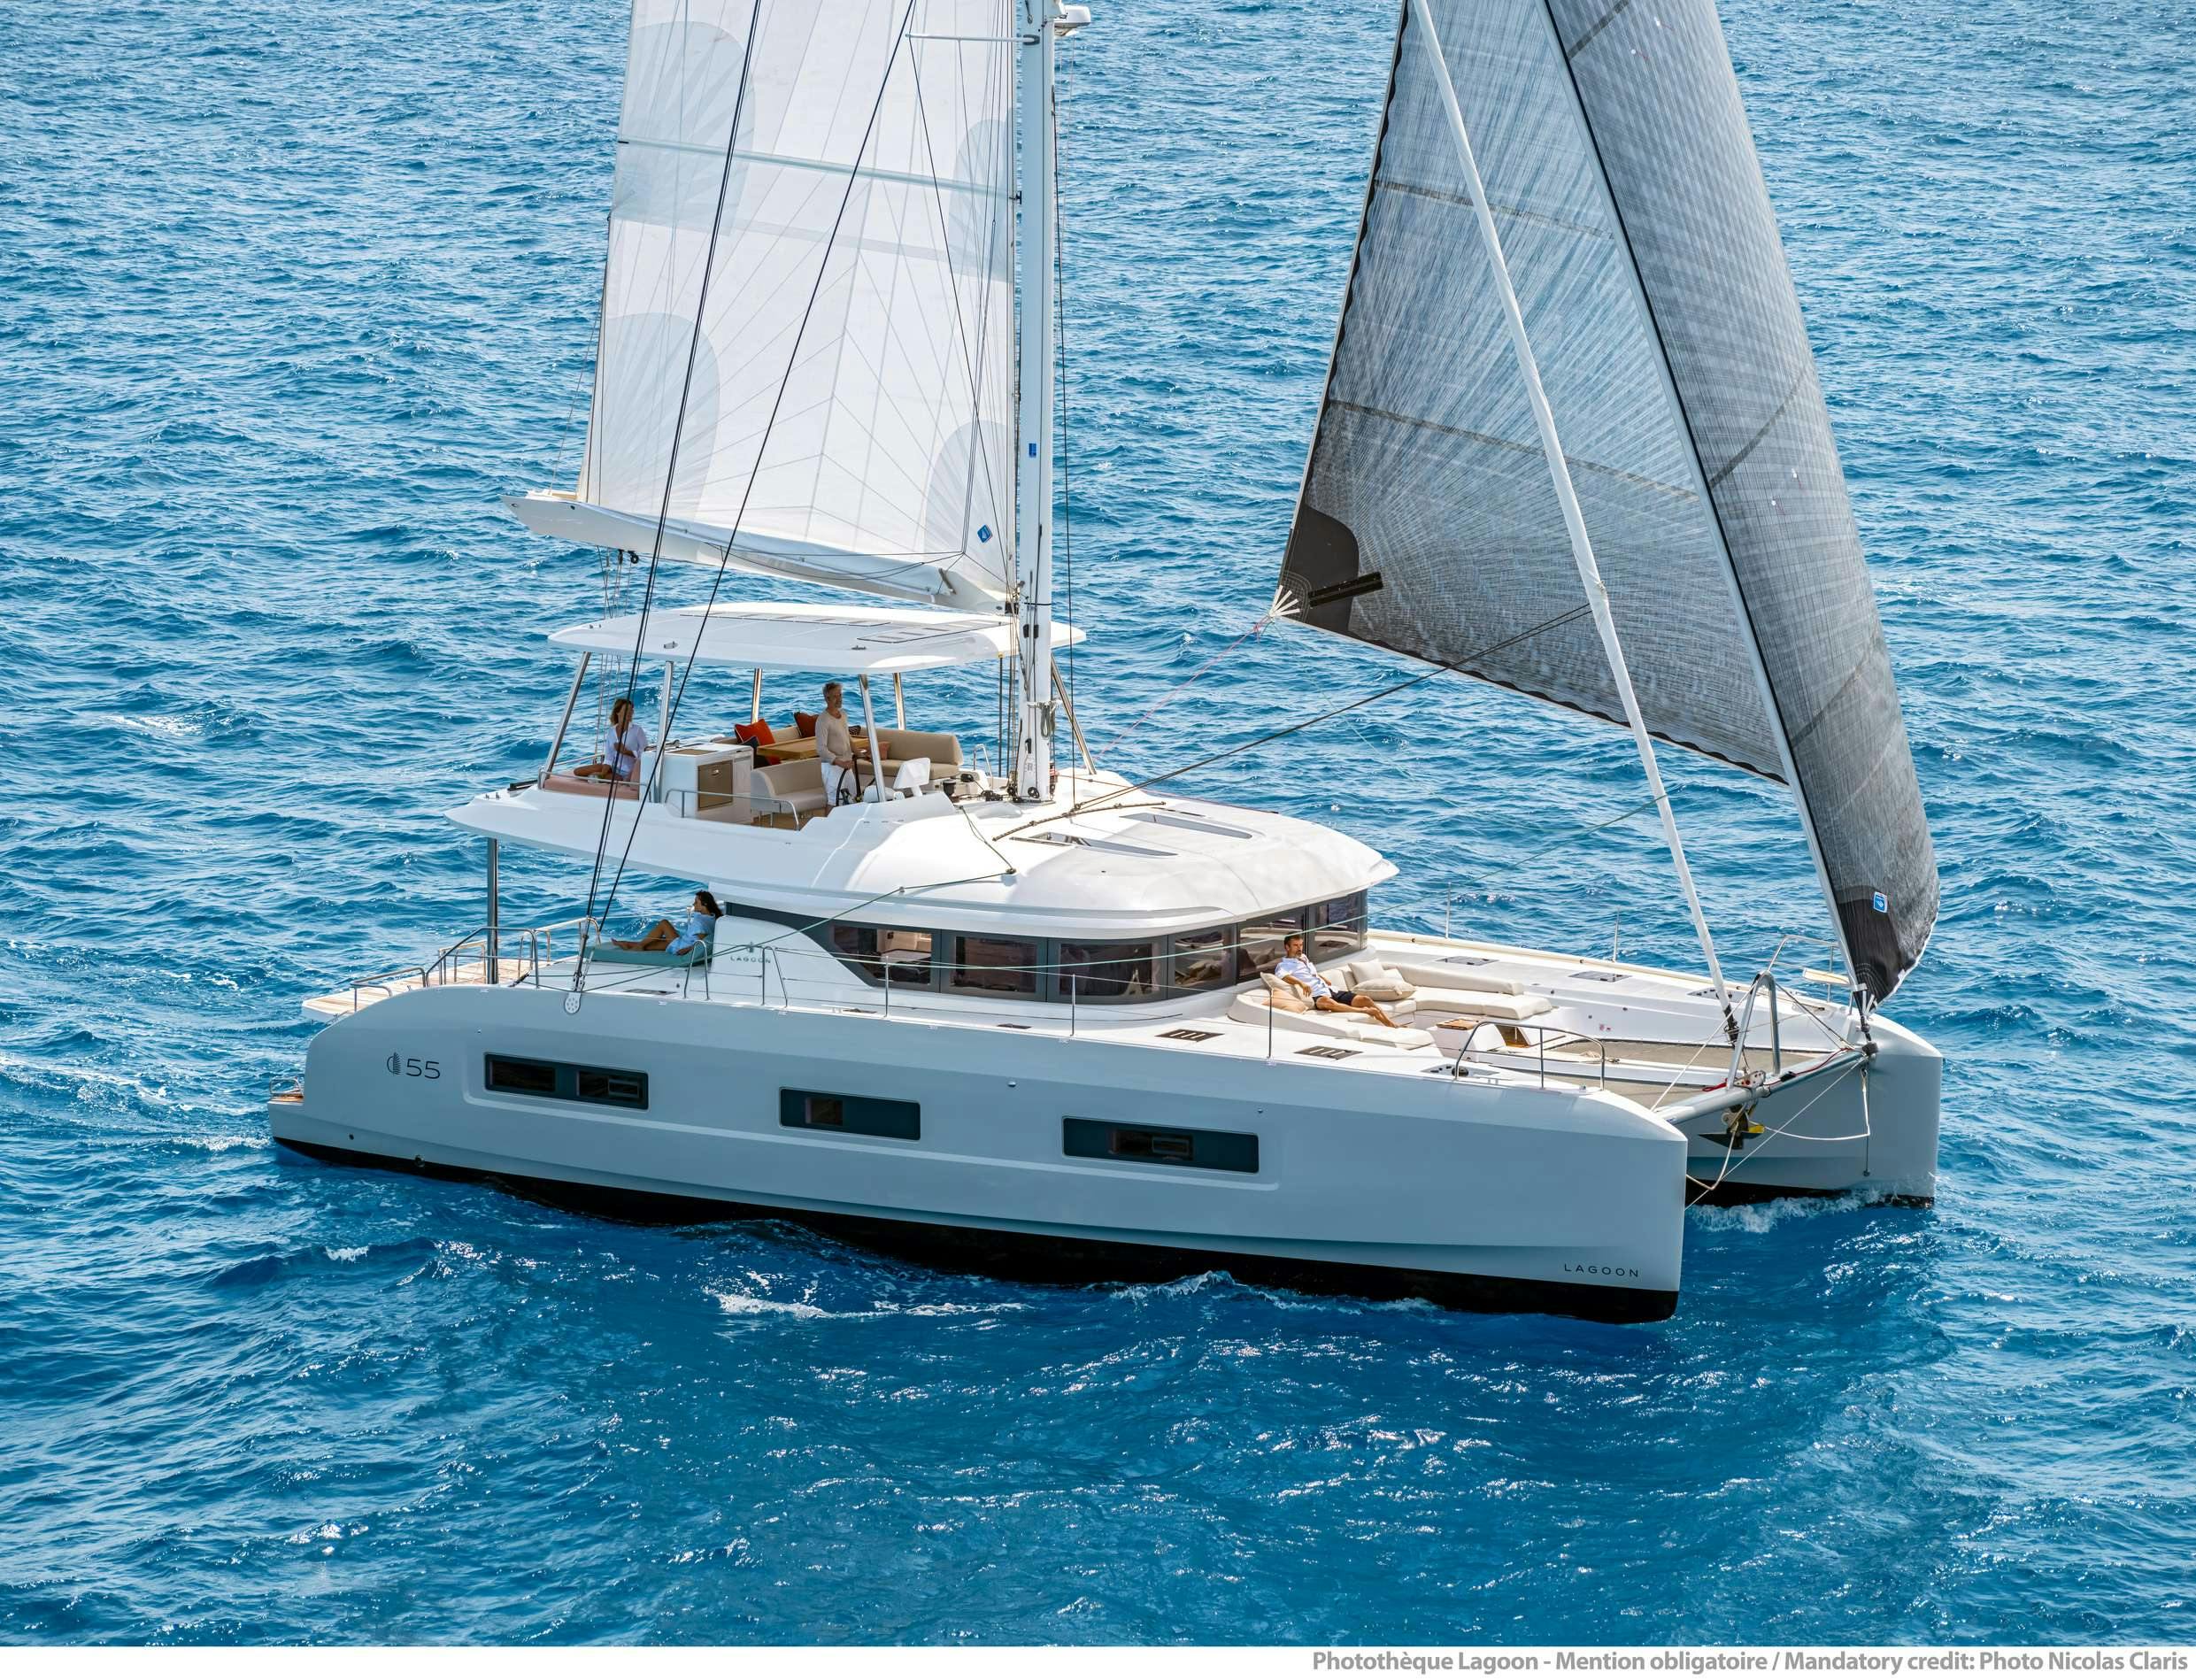 VALIUM 55 - Yacht Charter Mykonos & Boat hire in Greece 1